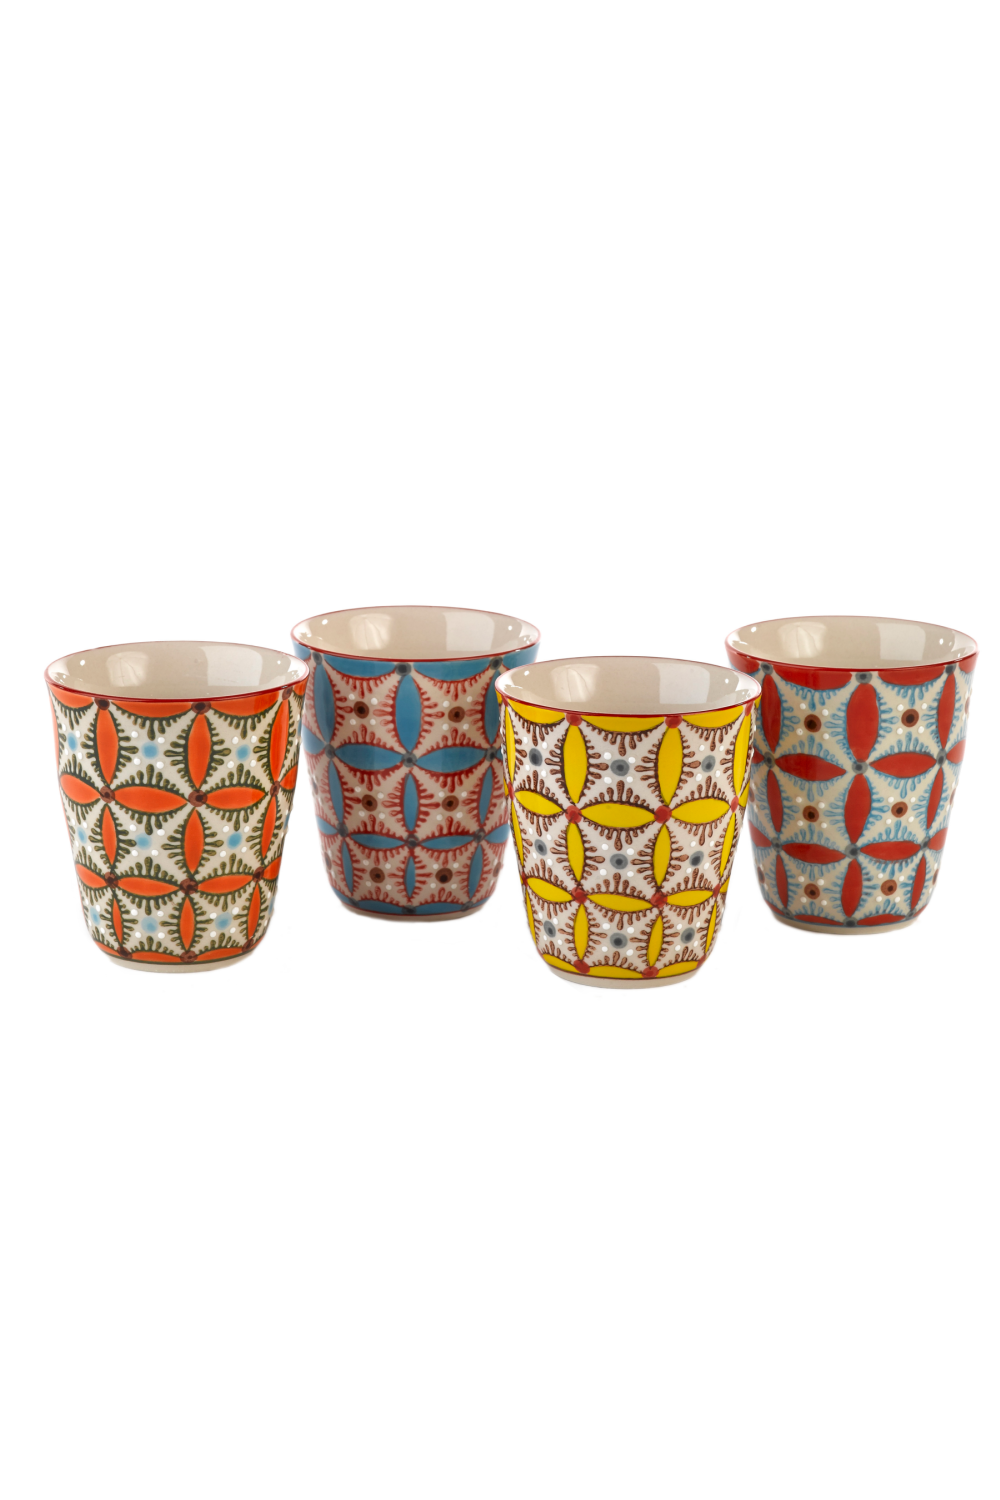 Productie Lijkenhuis Variant Glazed Ceramic Cups | Pols Potten Hippy